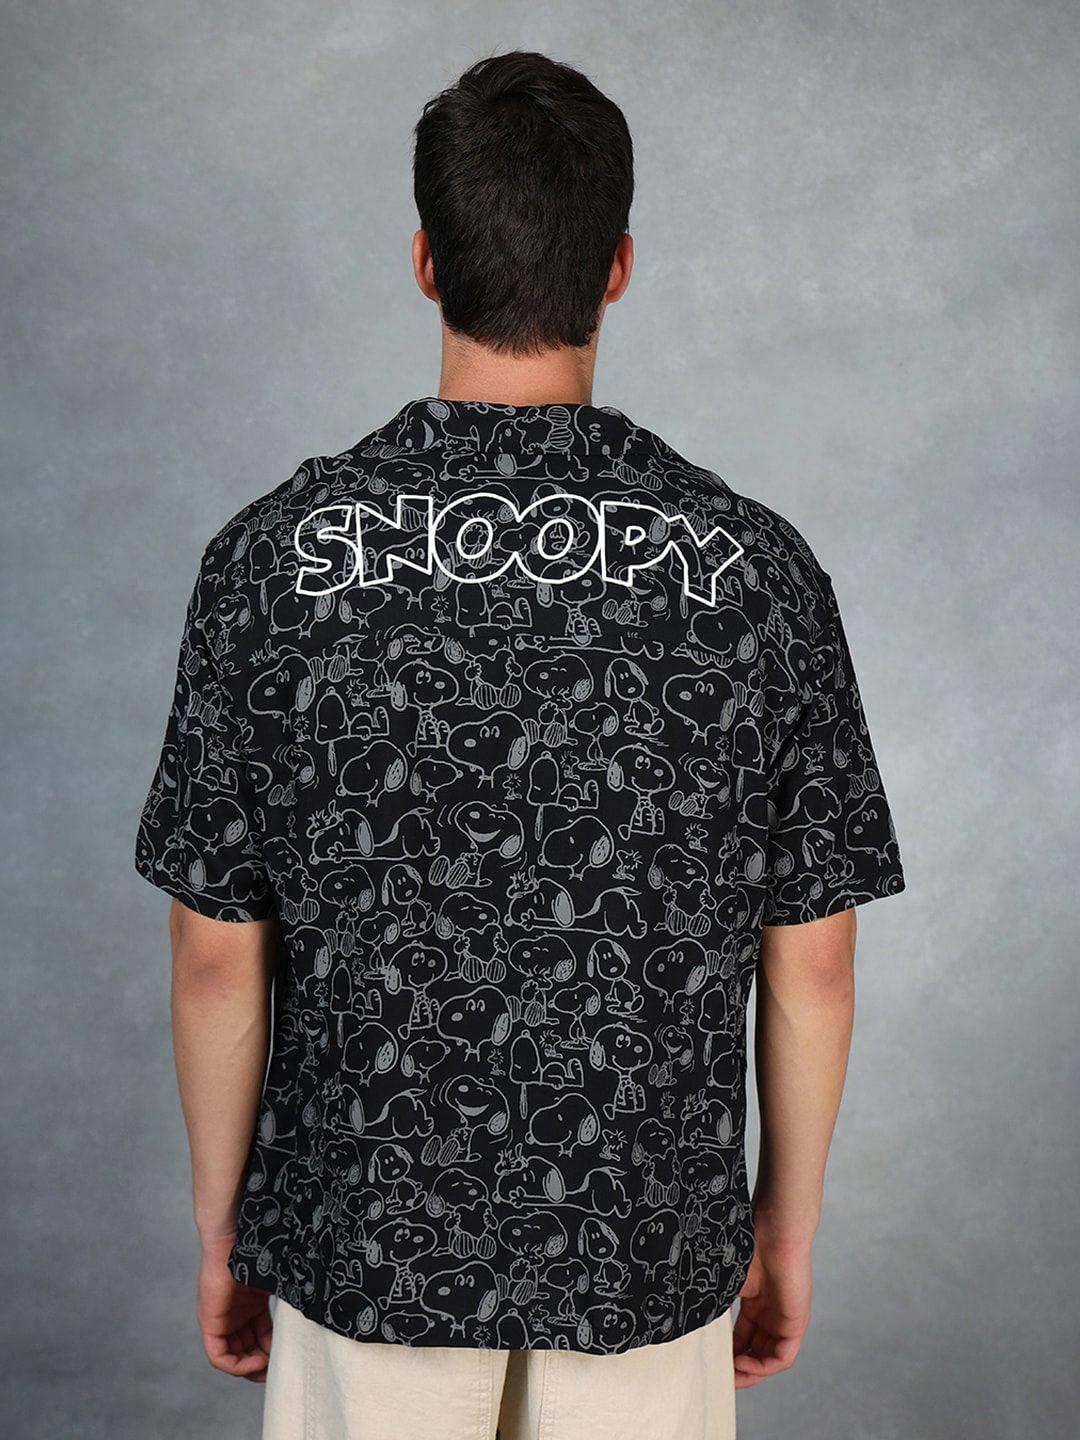 bewakoof-black-original-oversized-snoopy-printed-spread-collar-short-sleeves-casual-shirt